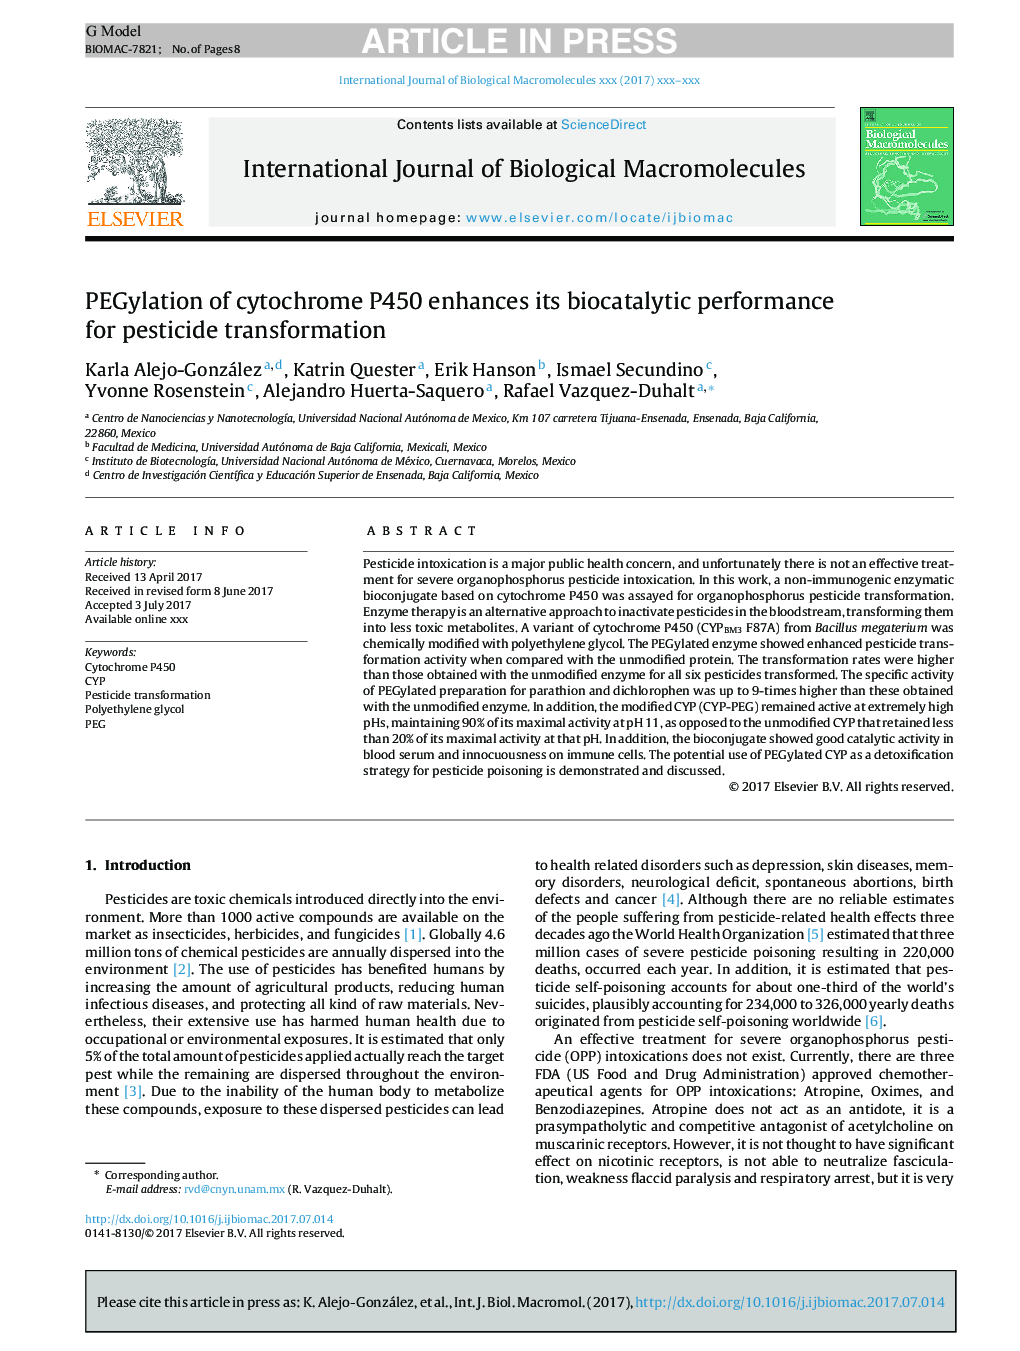 PEGylation of cytochrome P450 enhances its biocatalytic performance for pesticide transformation